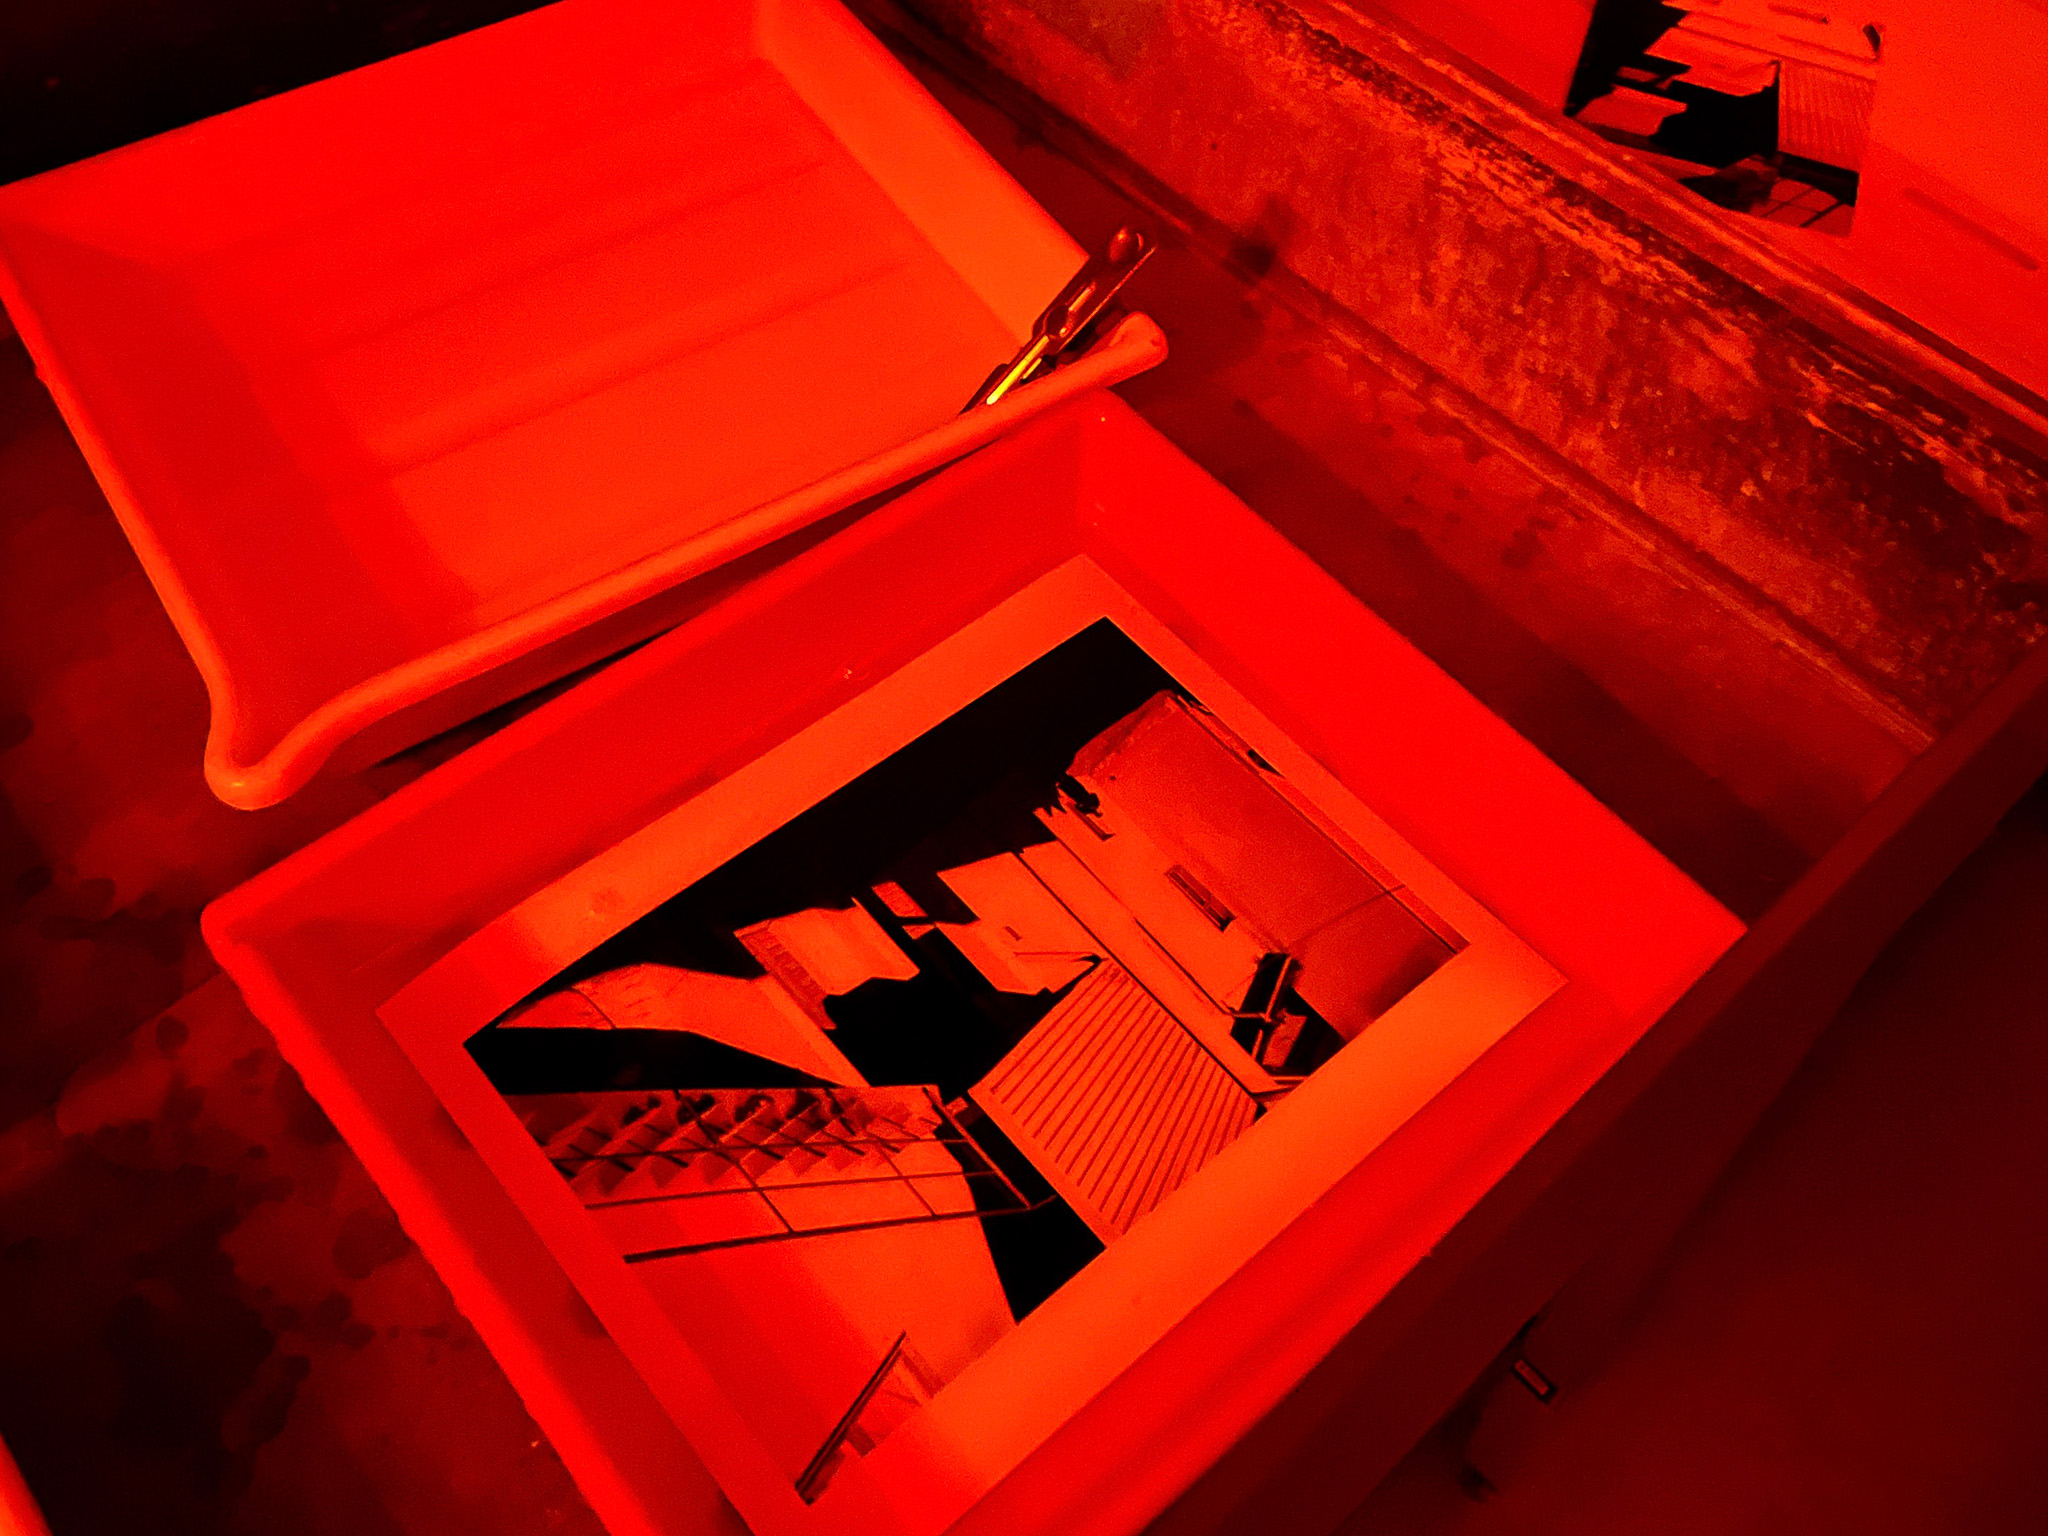 Hopeagelatiinivedos kiinnitteessä pimiön punavalossa (kuva: Janne Myllymäki)